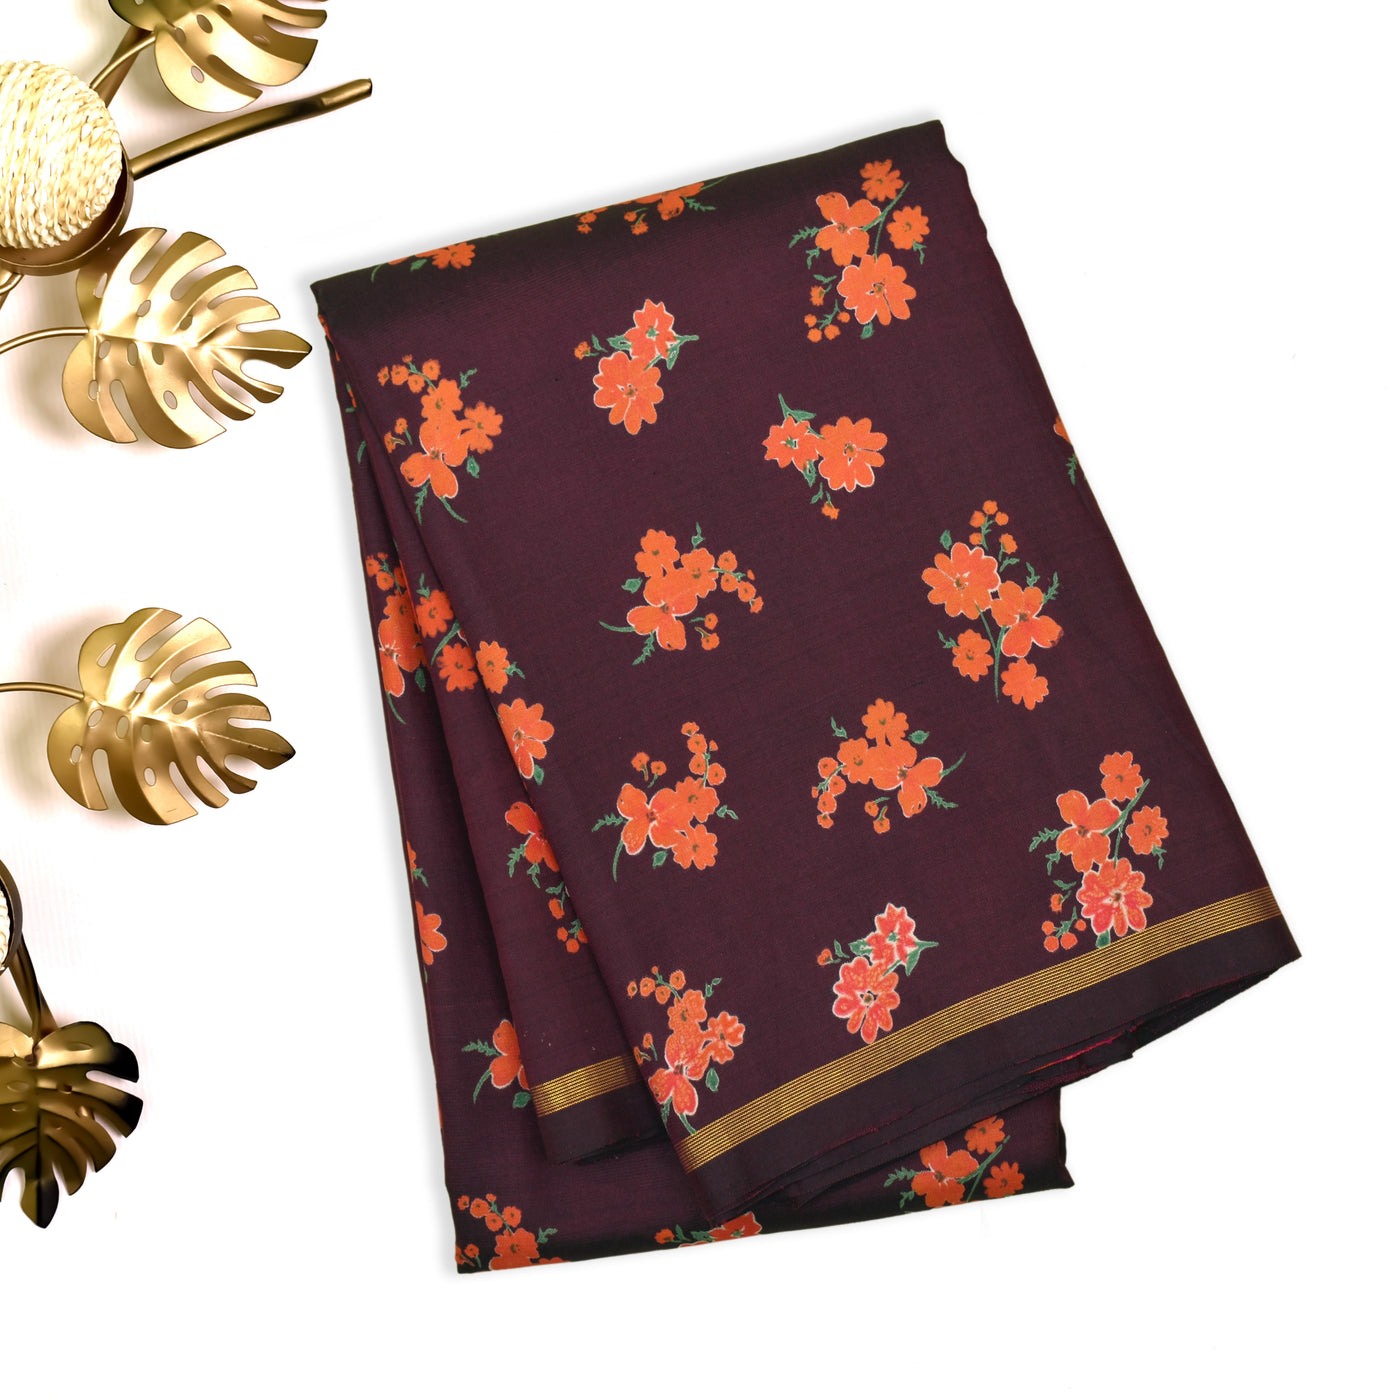 V Pakku Printed Kanchi Silk Saree with Floral Print Design